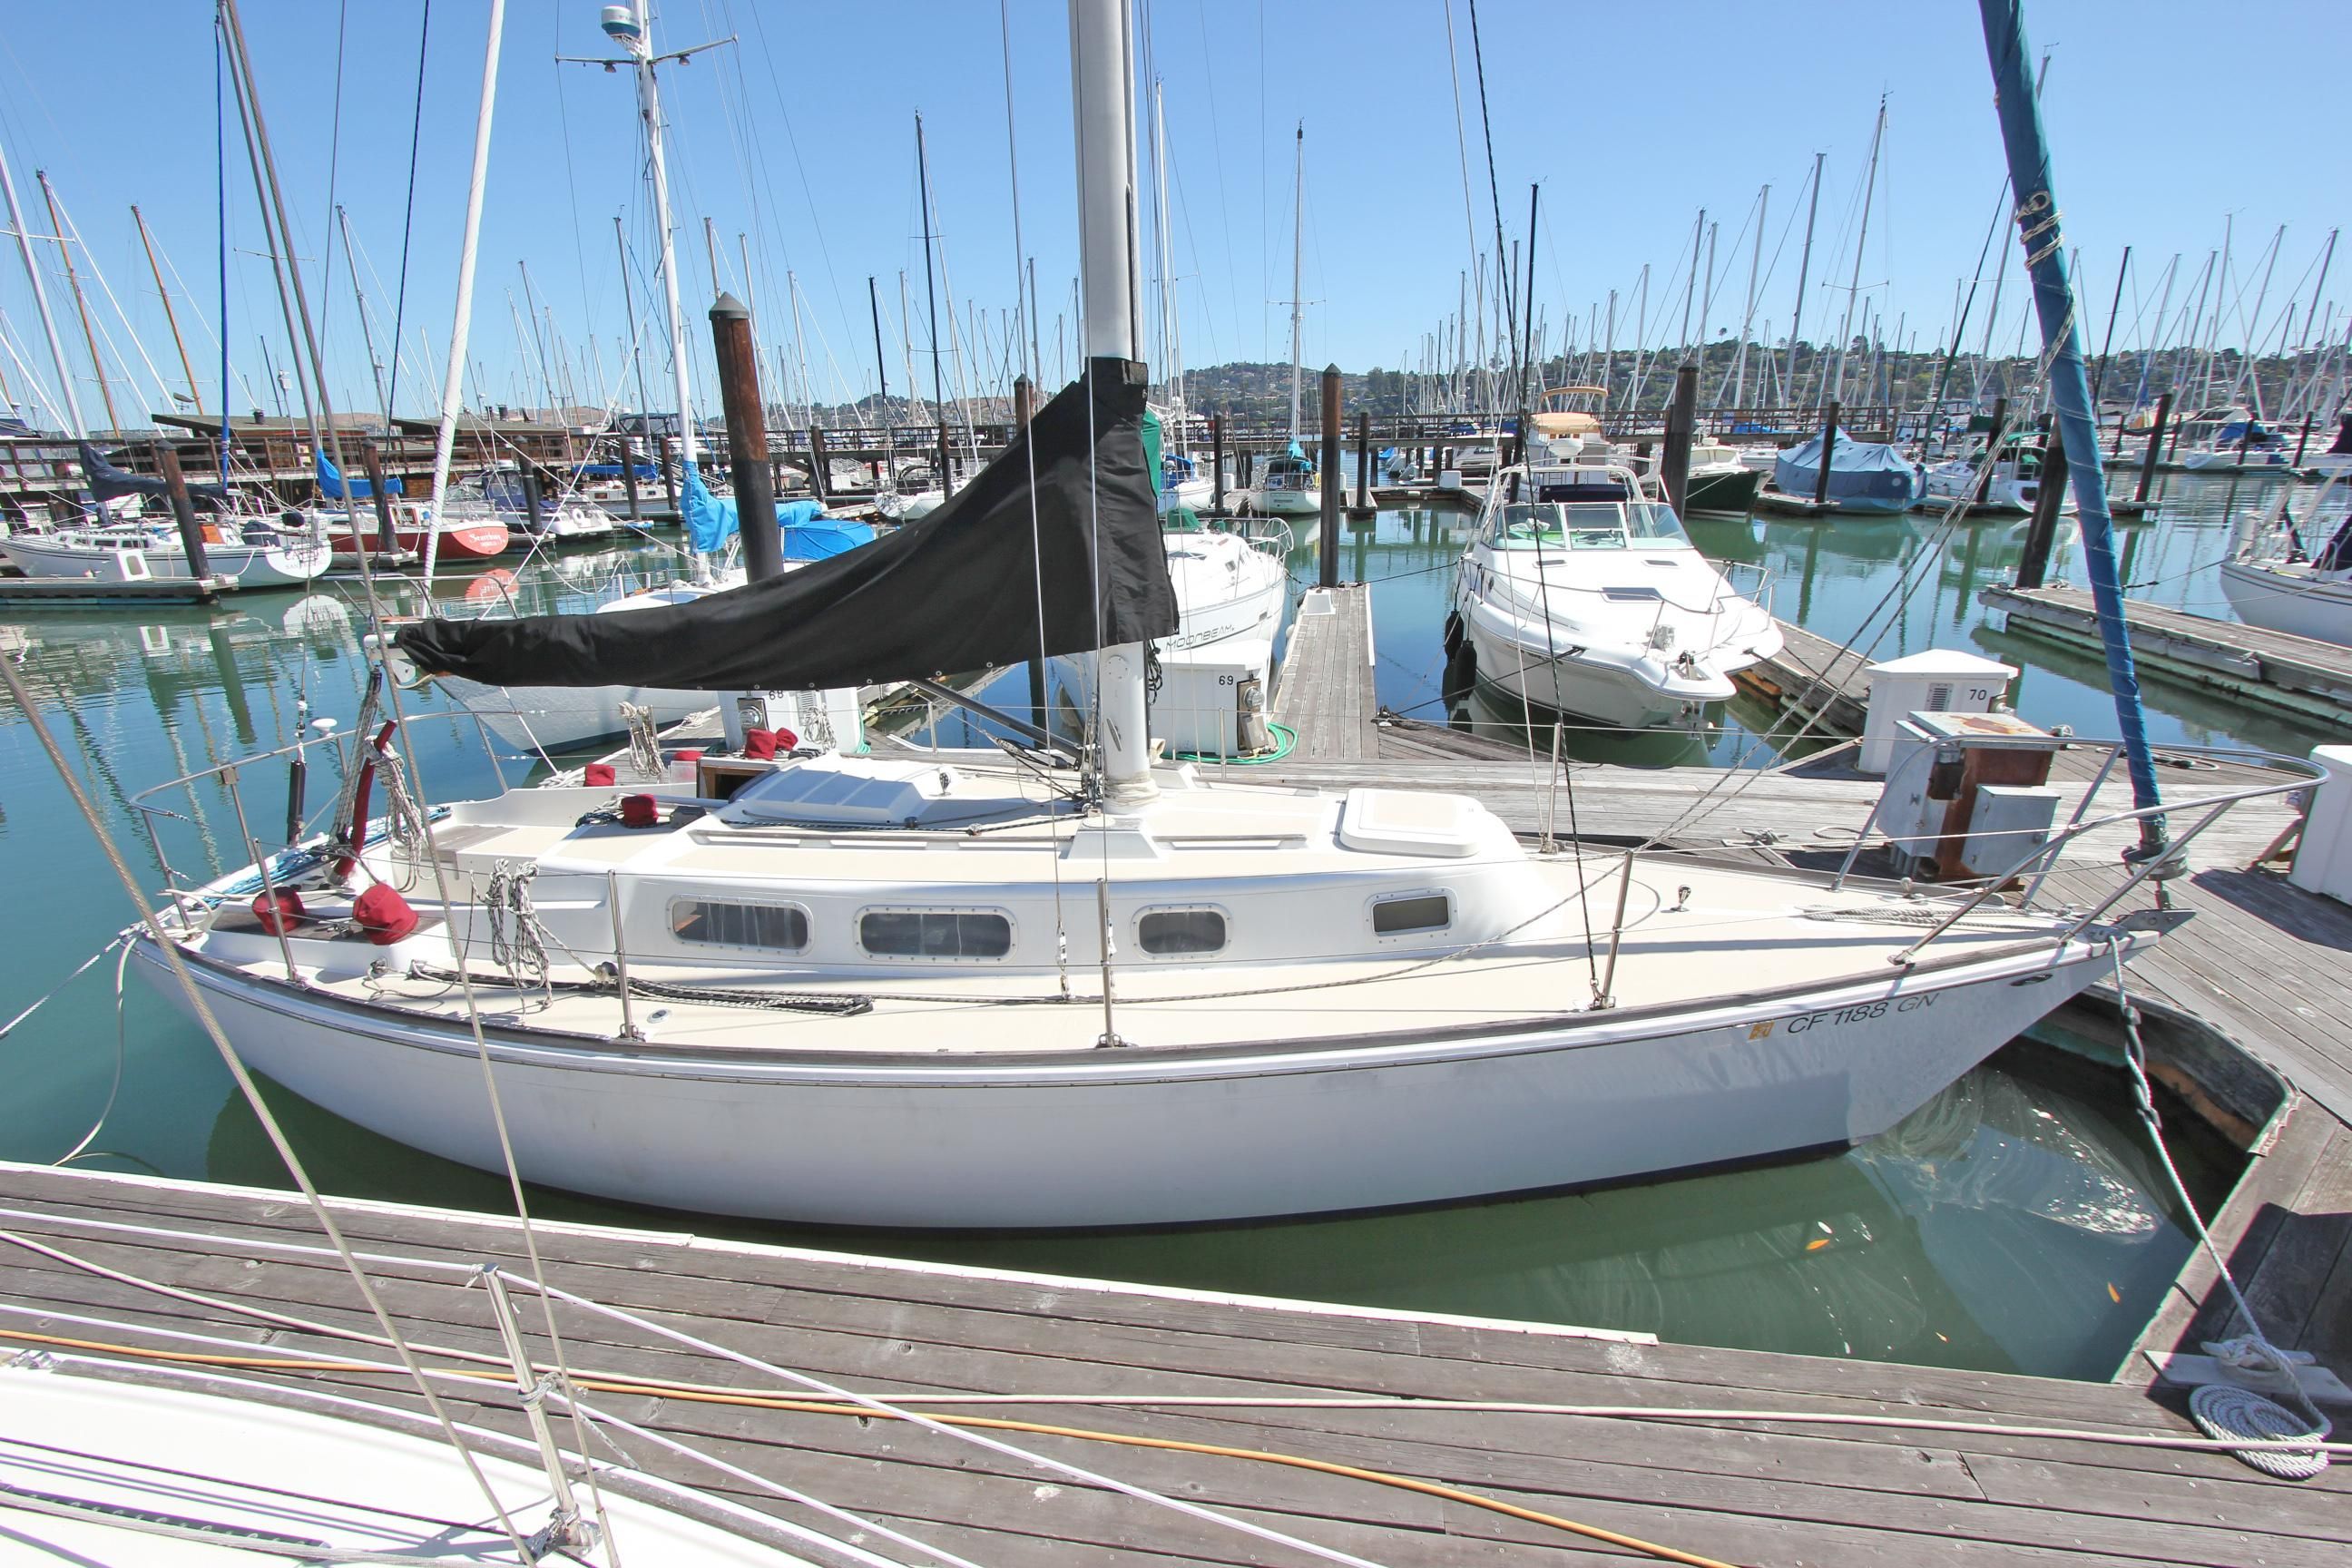 30 foot tartan sailboat